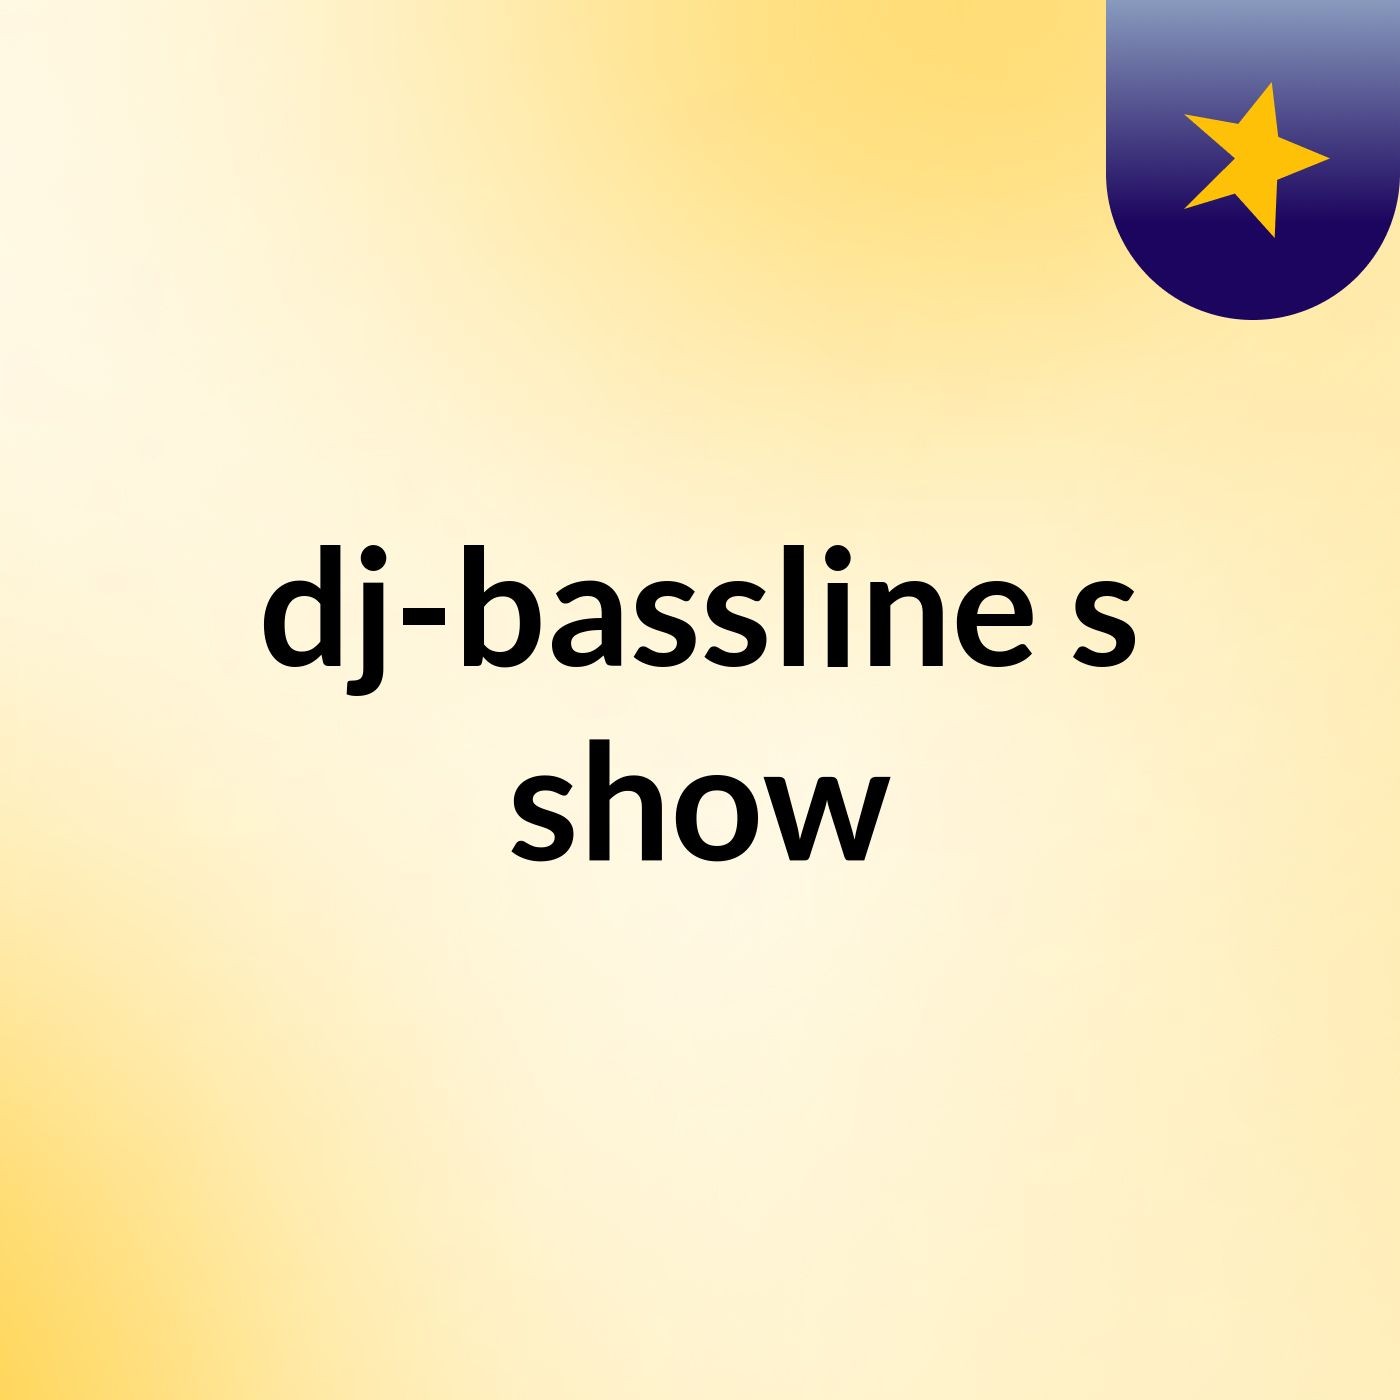 dj-bassline's show